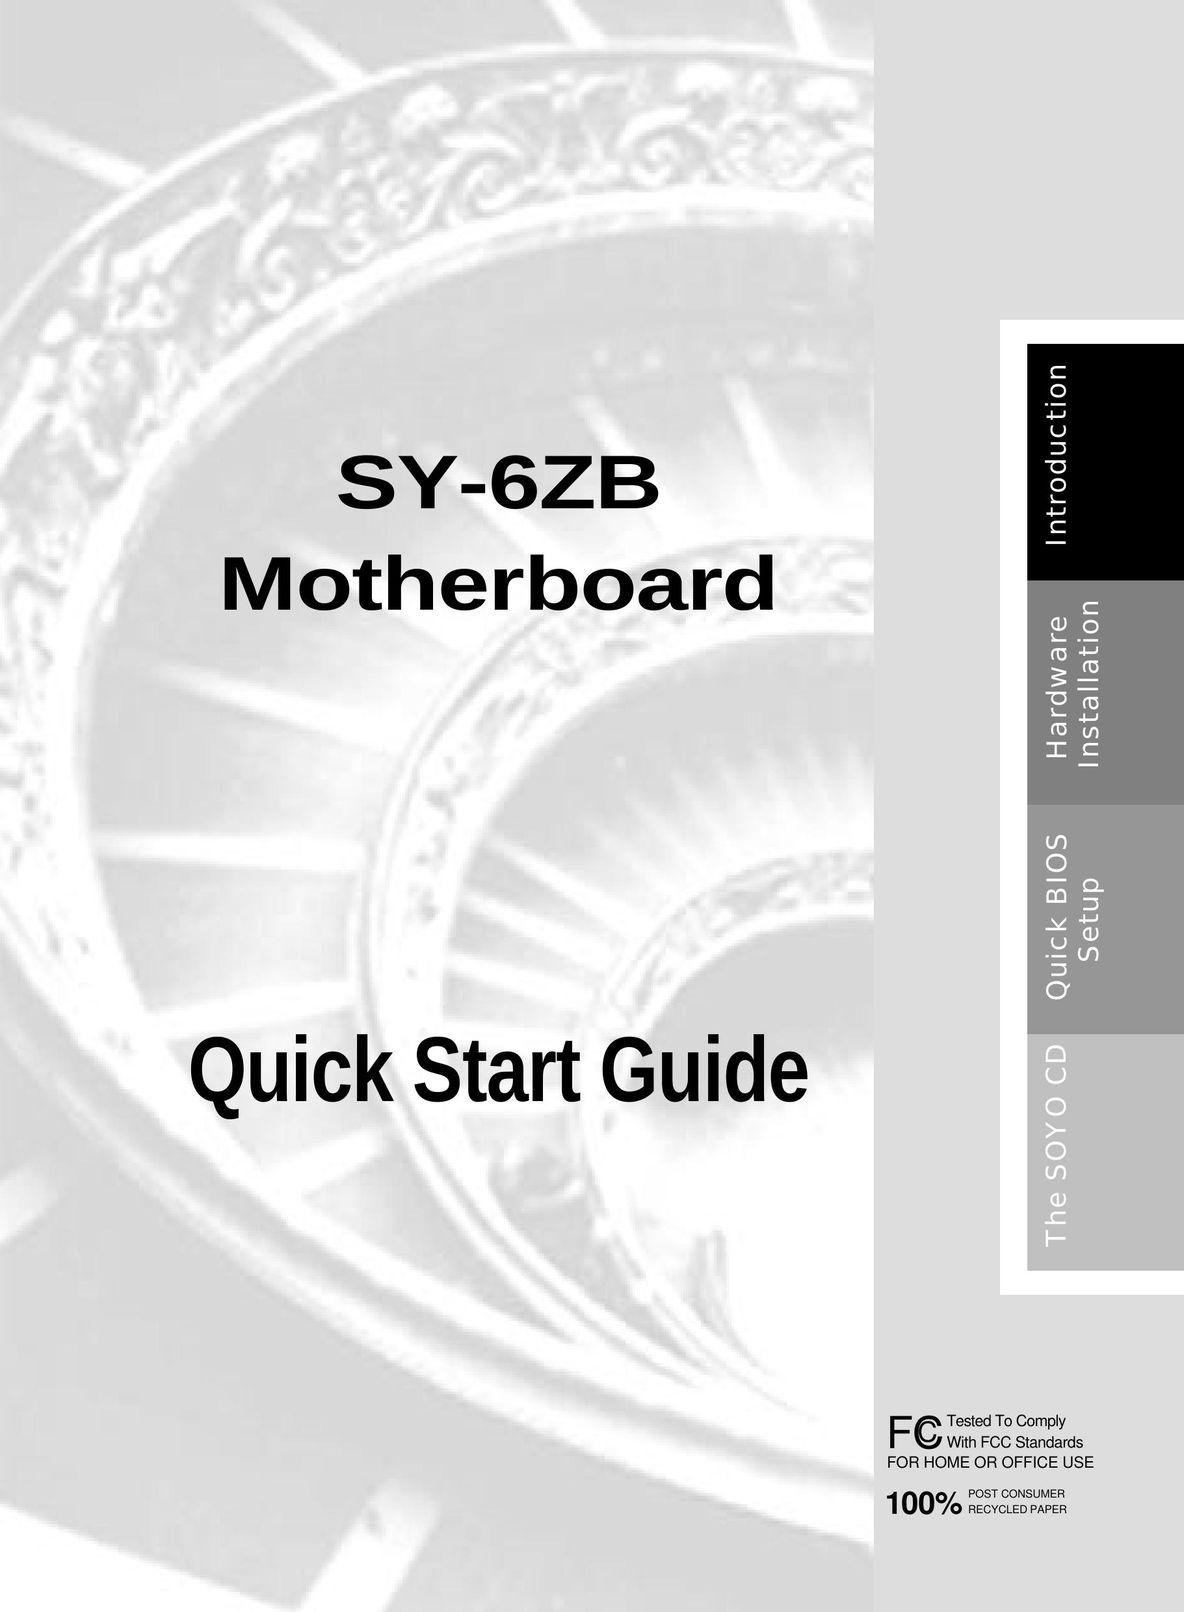 SOYO SY-6ZB Motherboard Computer Hardware User Manual